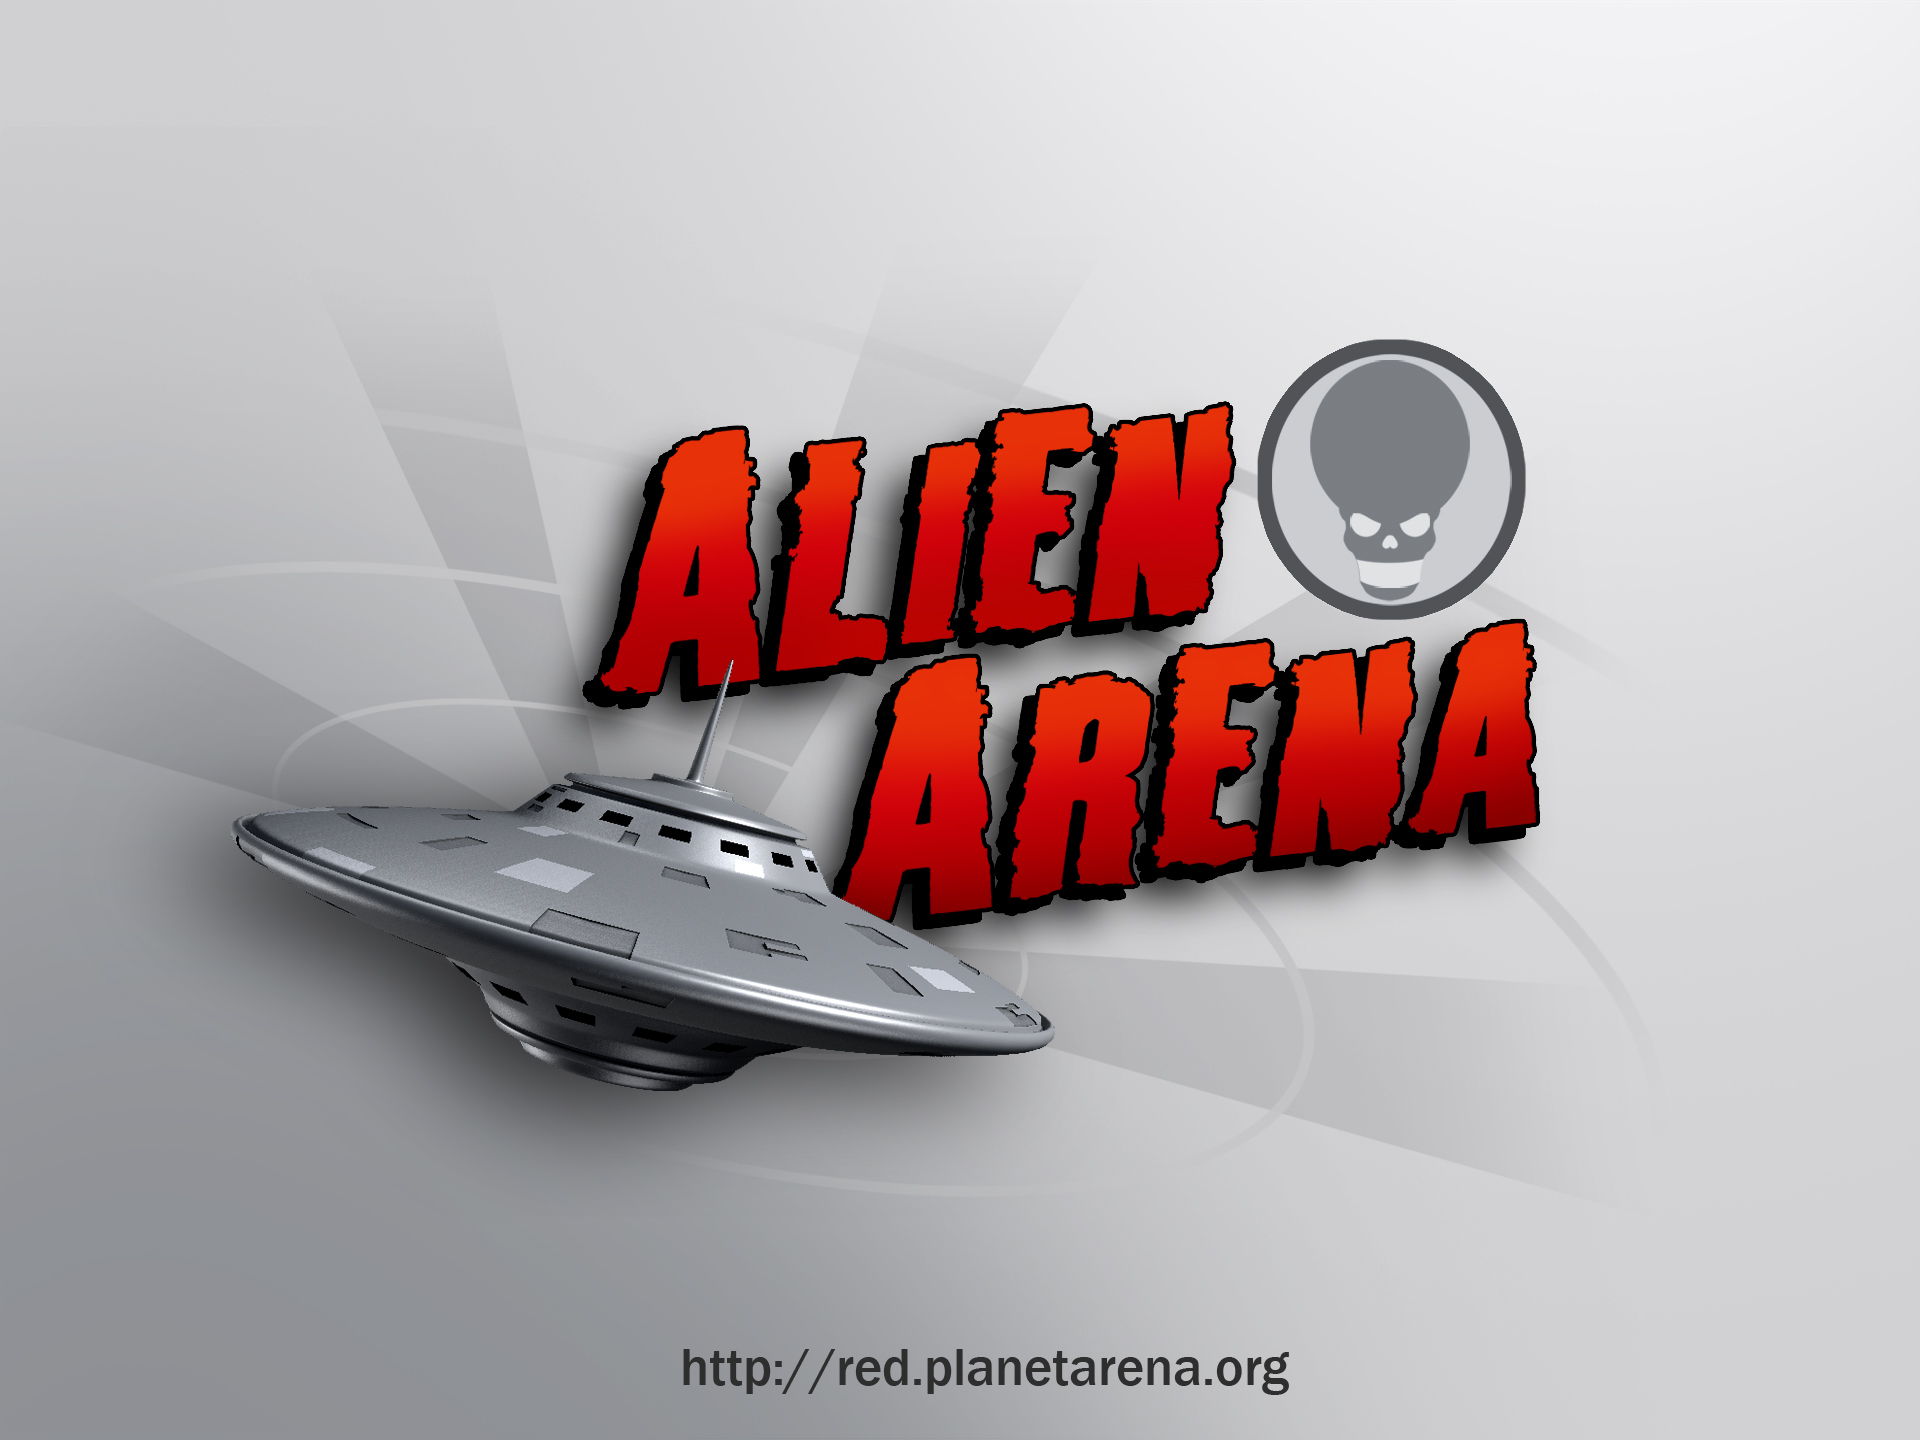 video game, alien arena